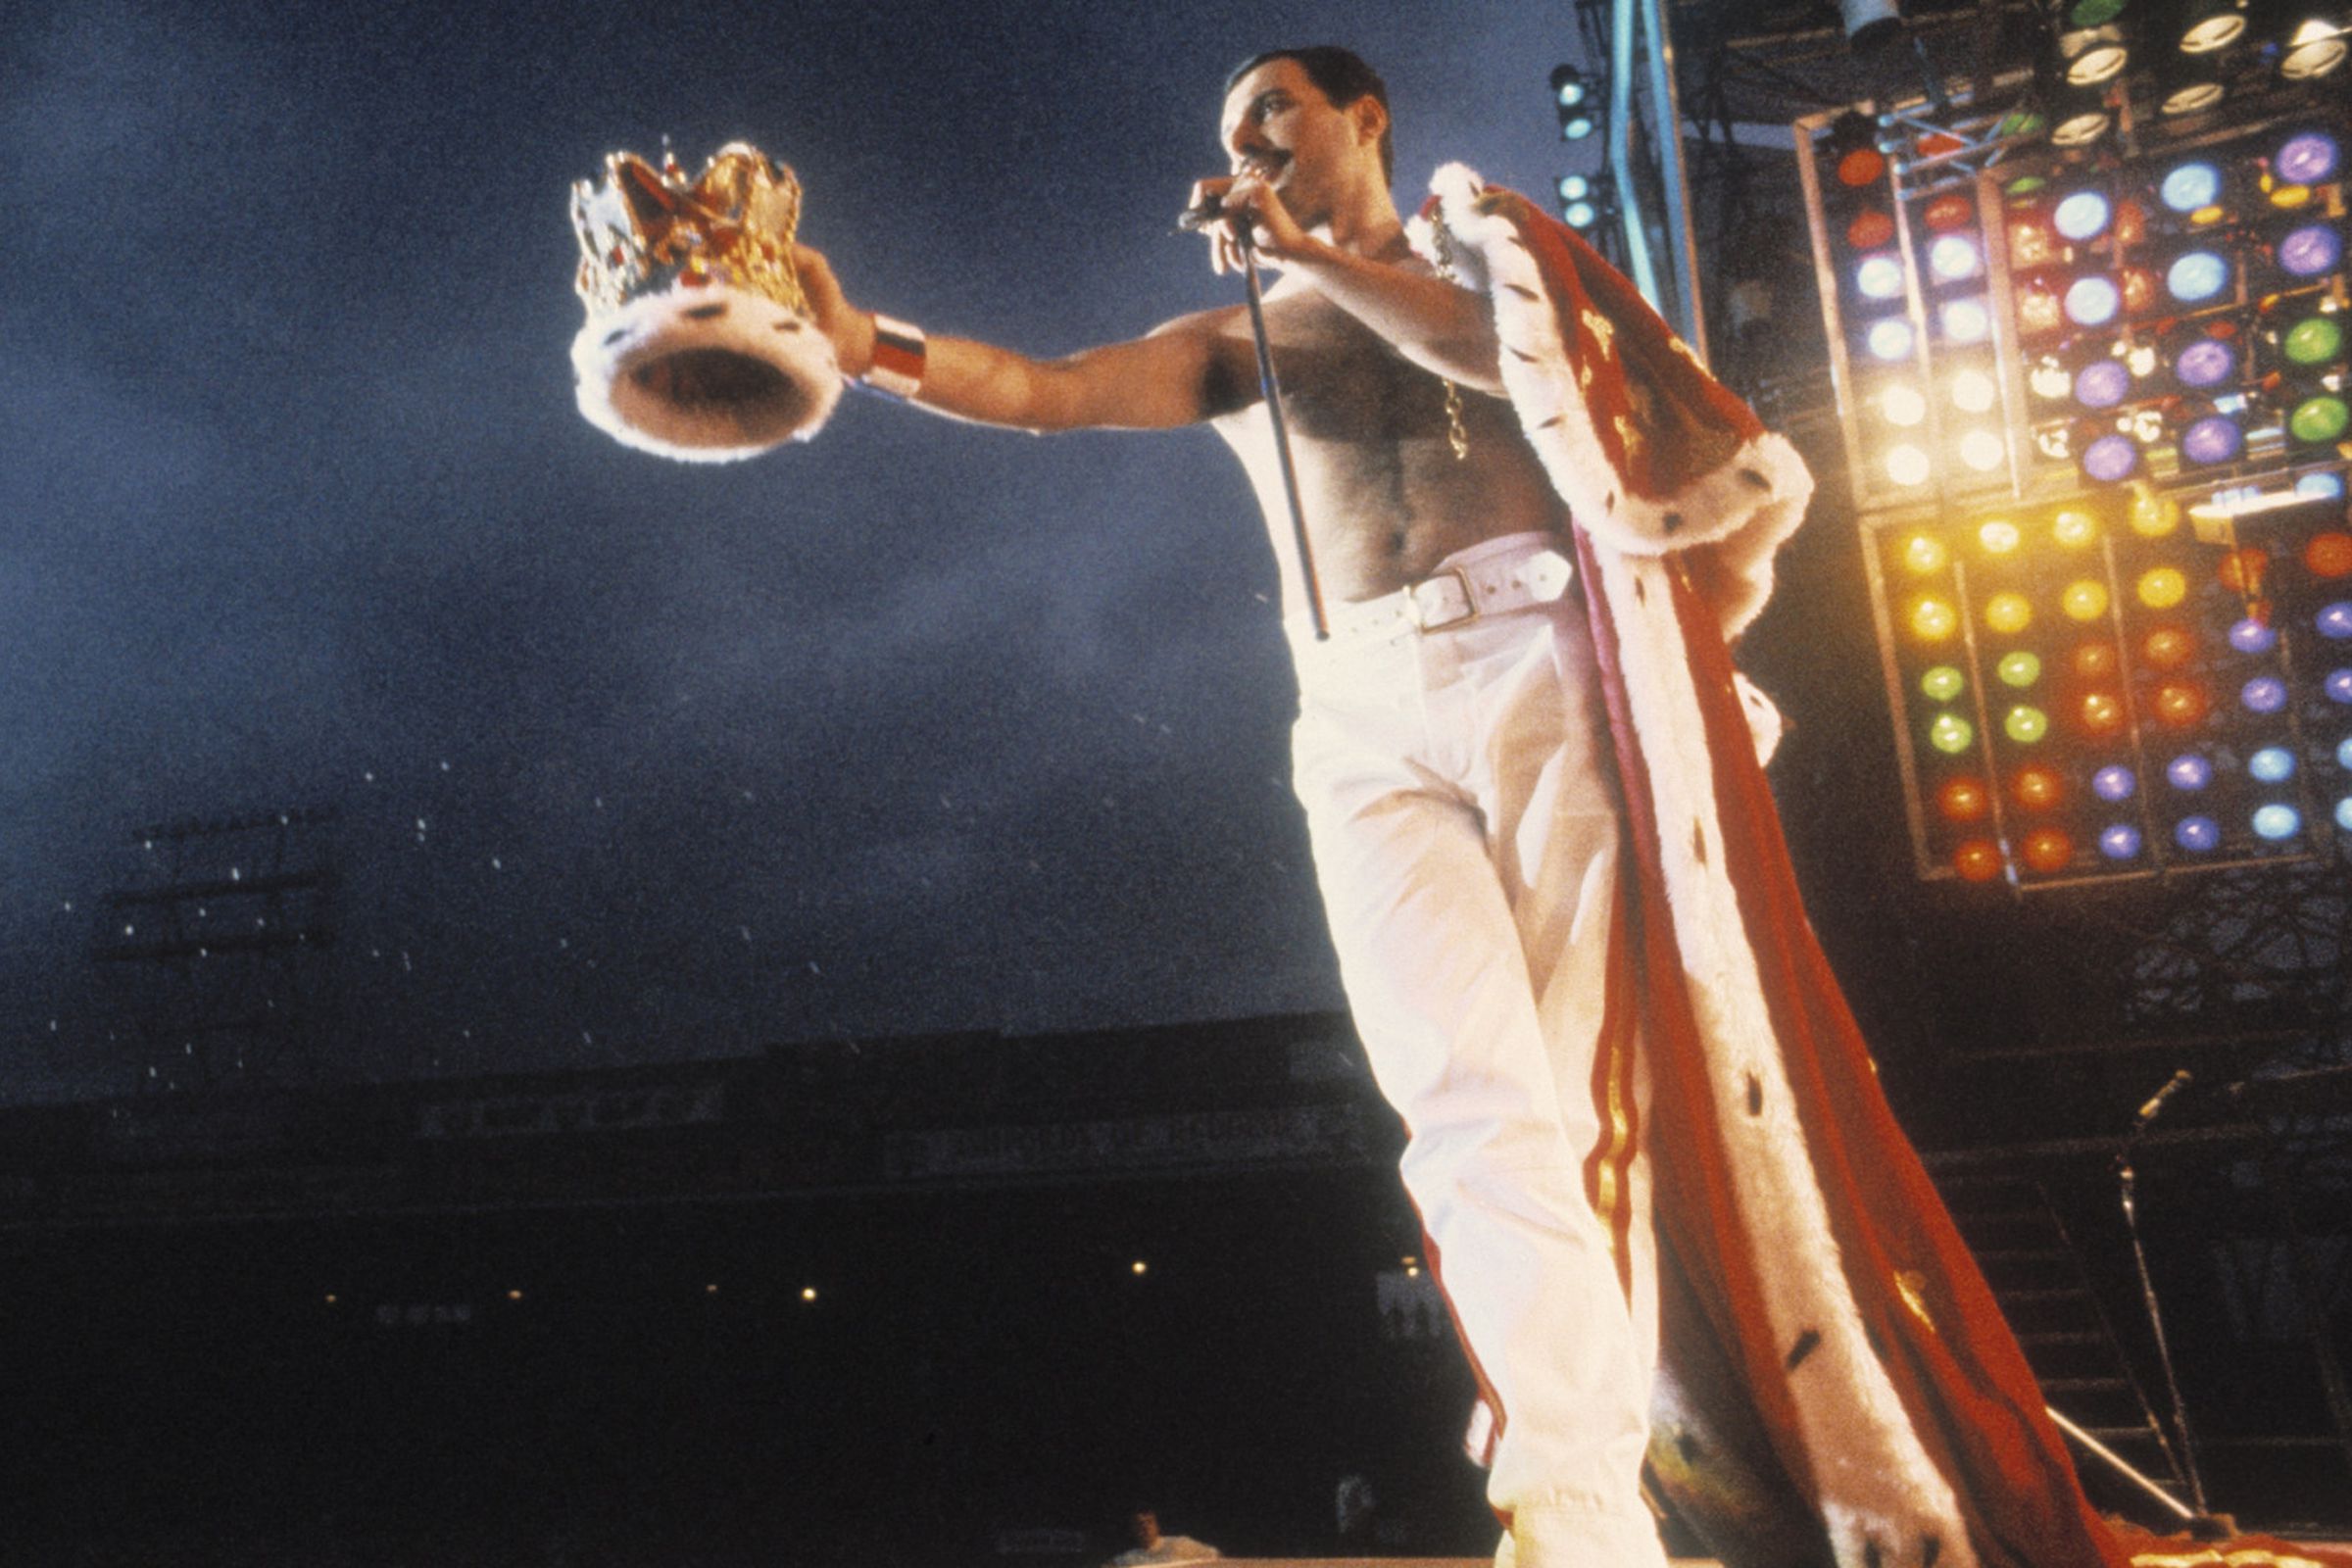 Clip show. Концерт Фредди Меркури на стадионе Уэмбли 1986. Концерт группы Queen стадион Уэмбли 1985. Queen Фредди Меркури. Фредди Меркьюри концерт Уэмбли 1986.